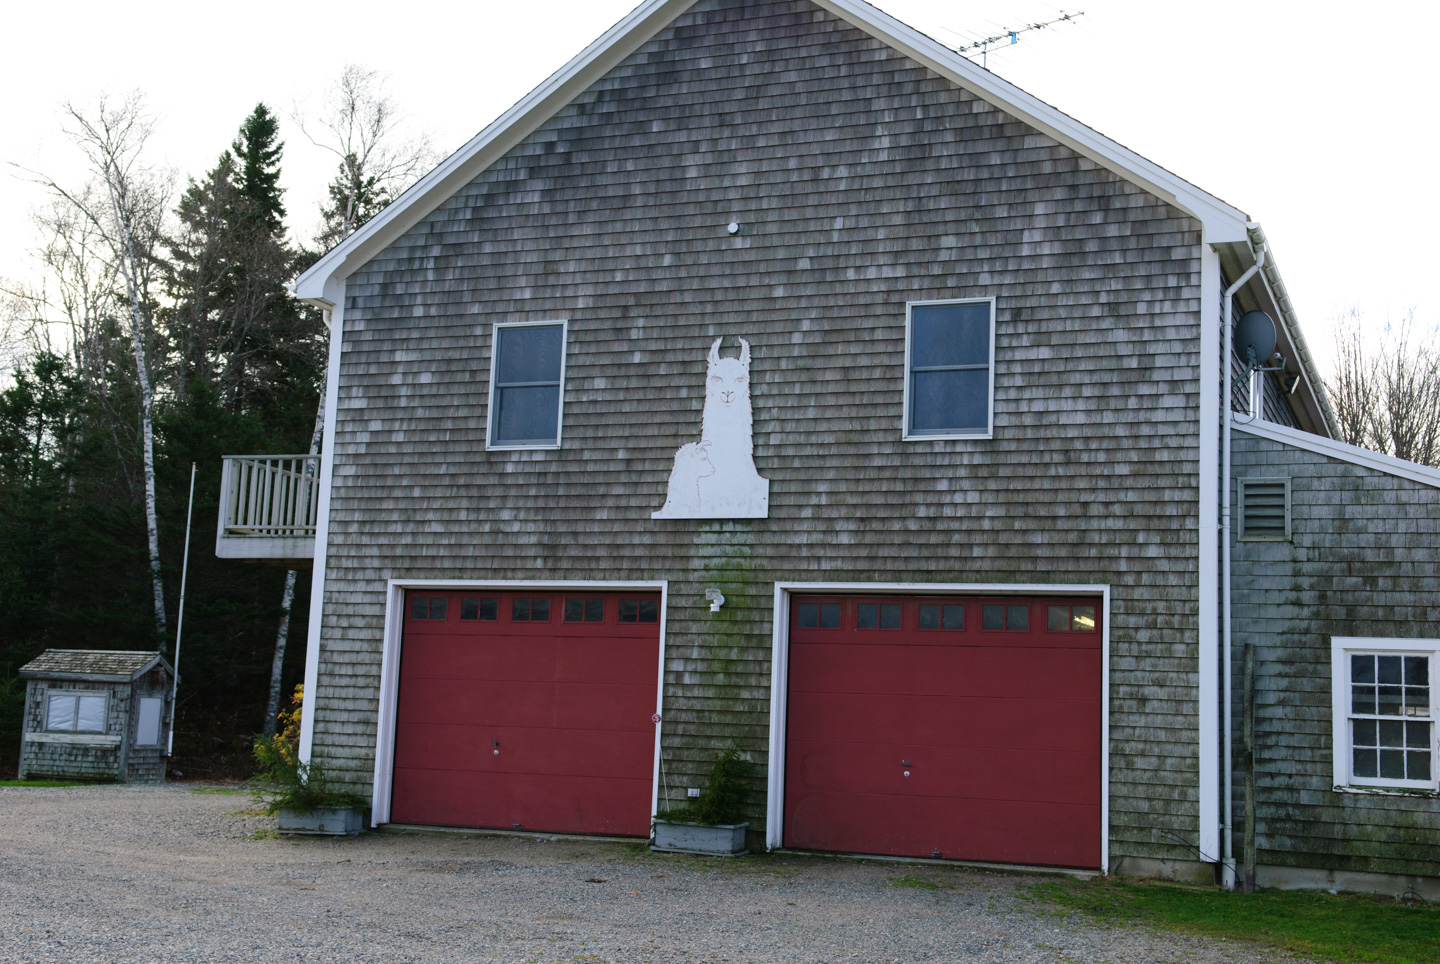 Farm garage with a llama sign above it